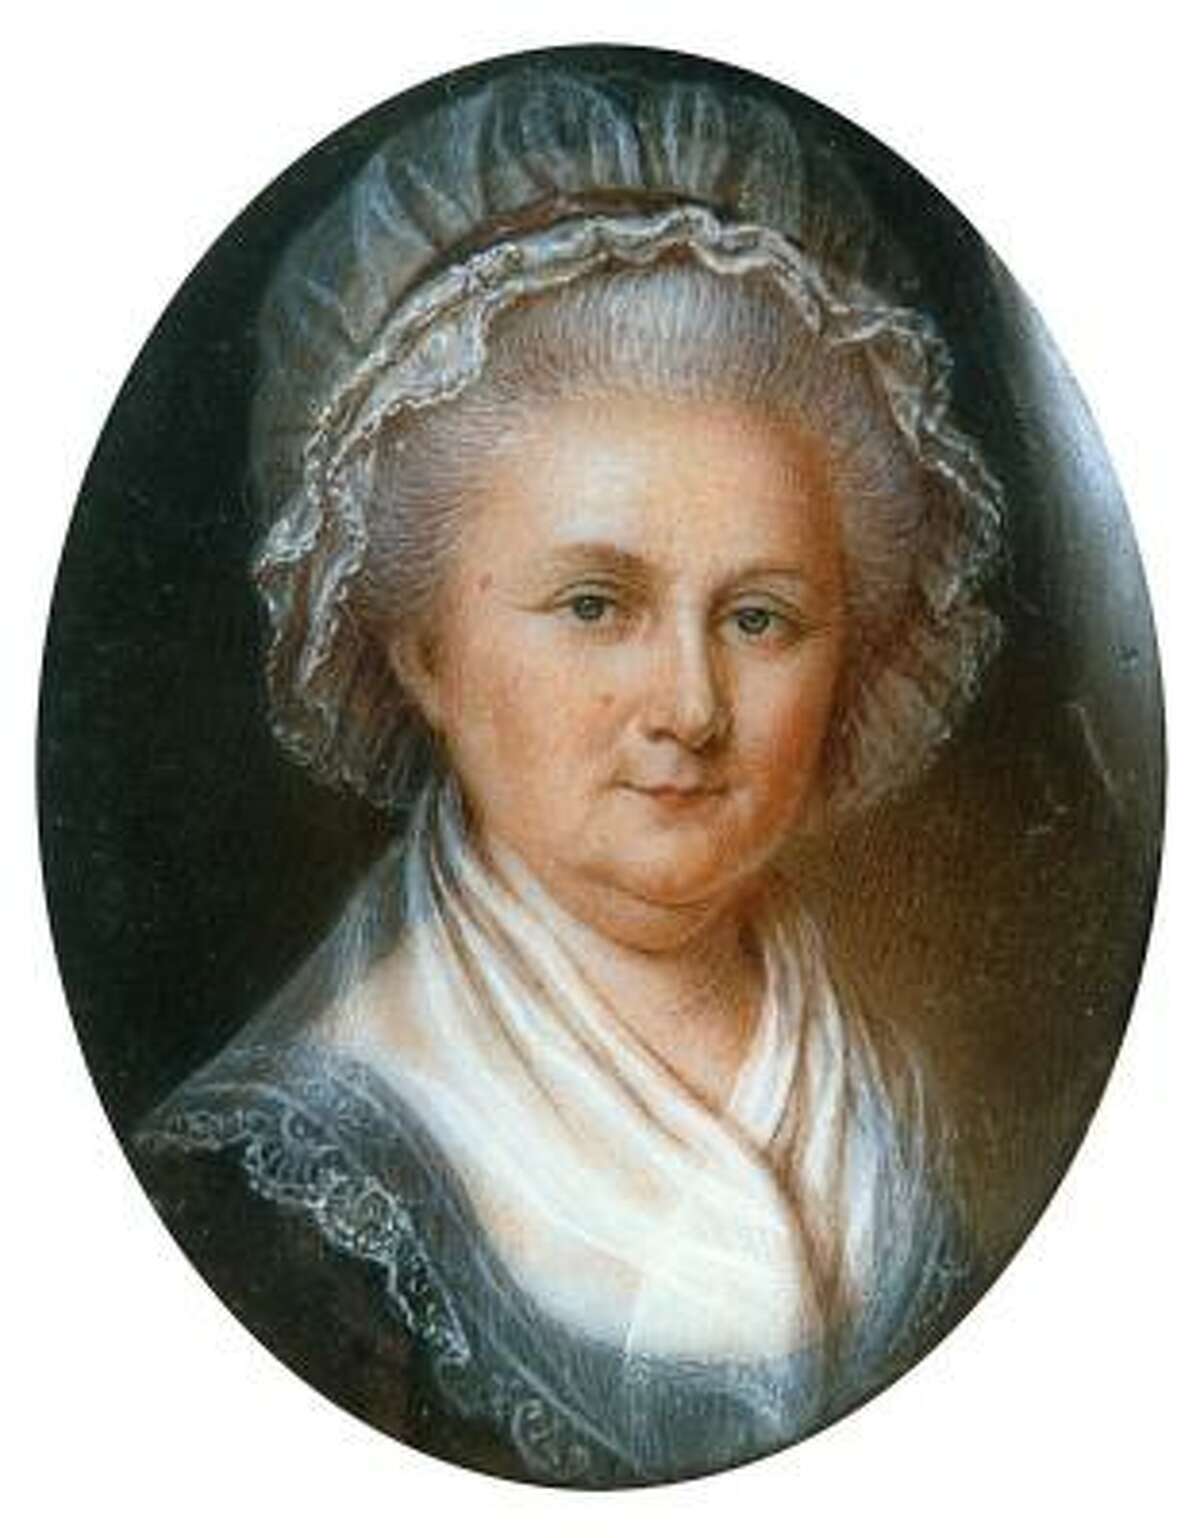 PORTRAIT: In 1796, James Peale painted this portrait of Martha Washington.